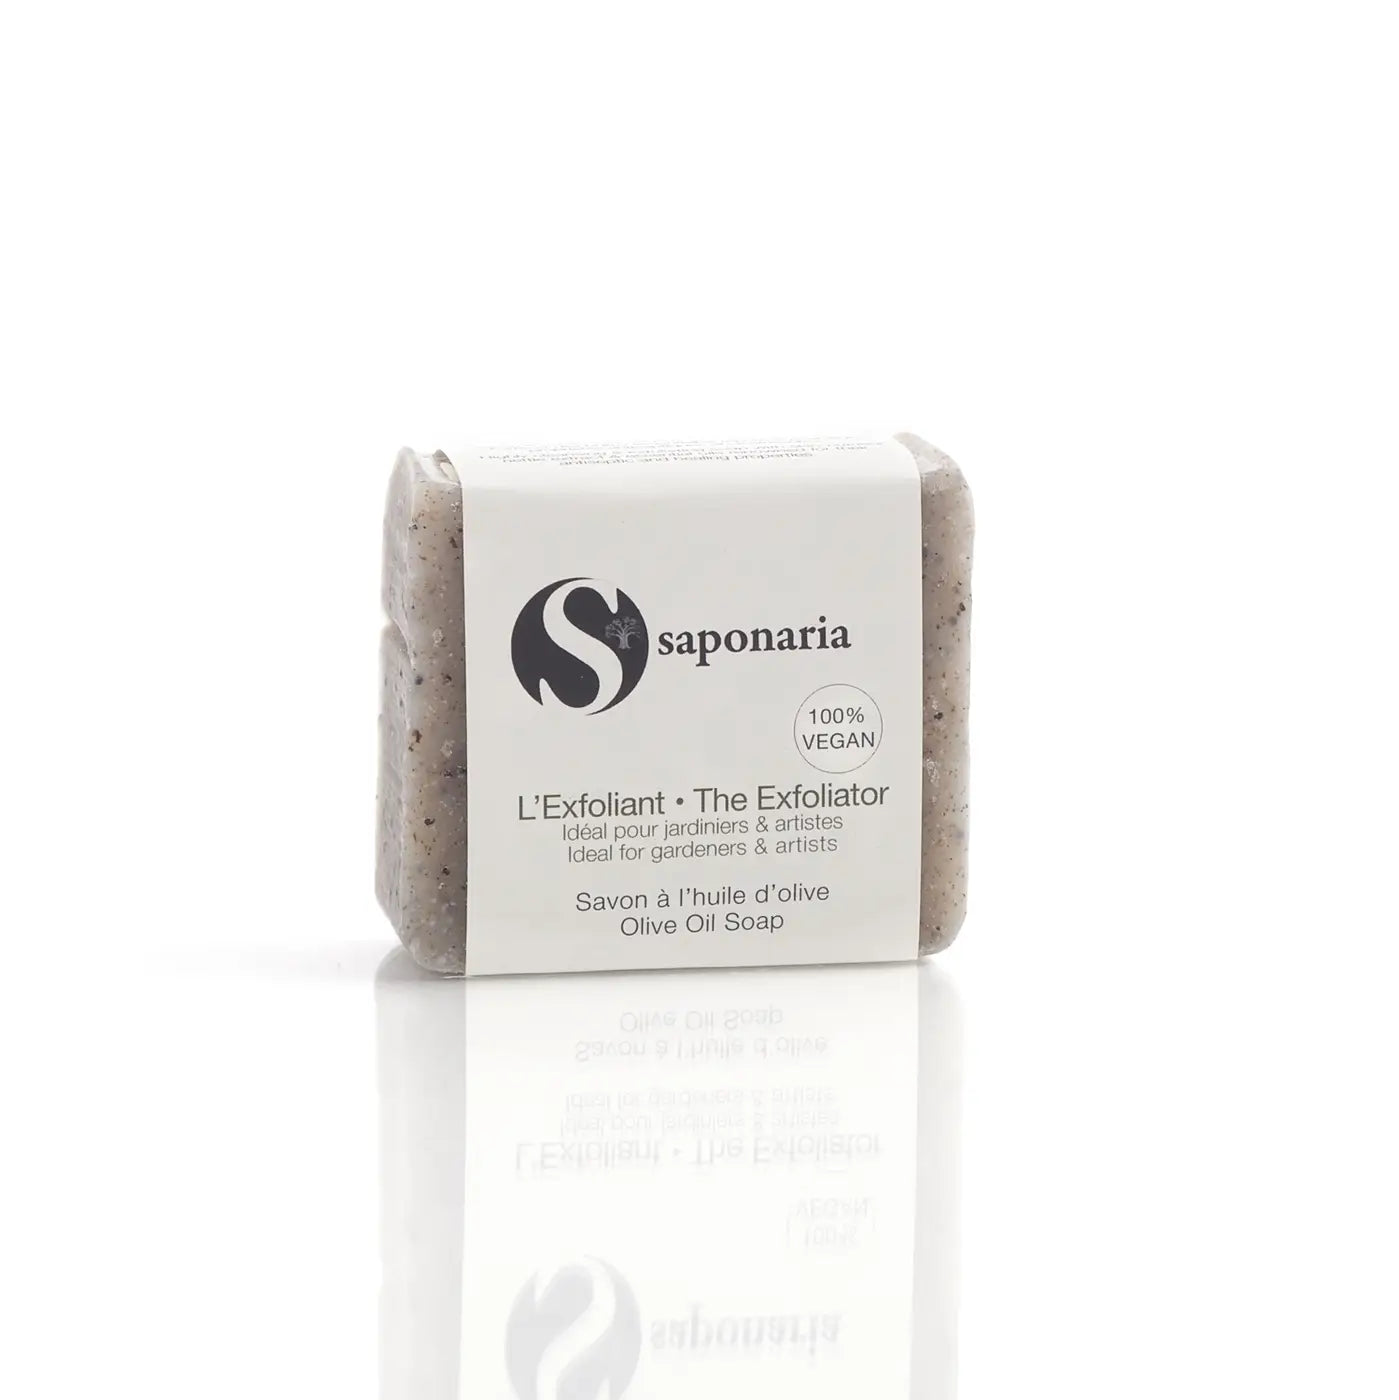 Saponaria soap the exfoliator